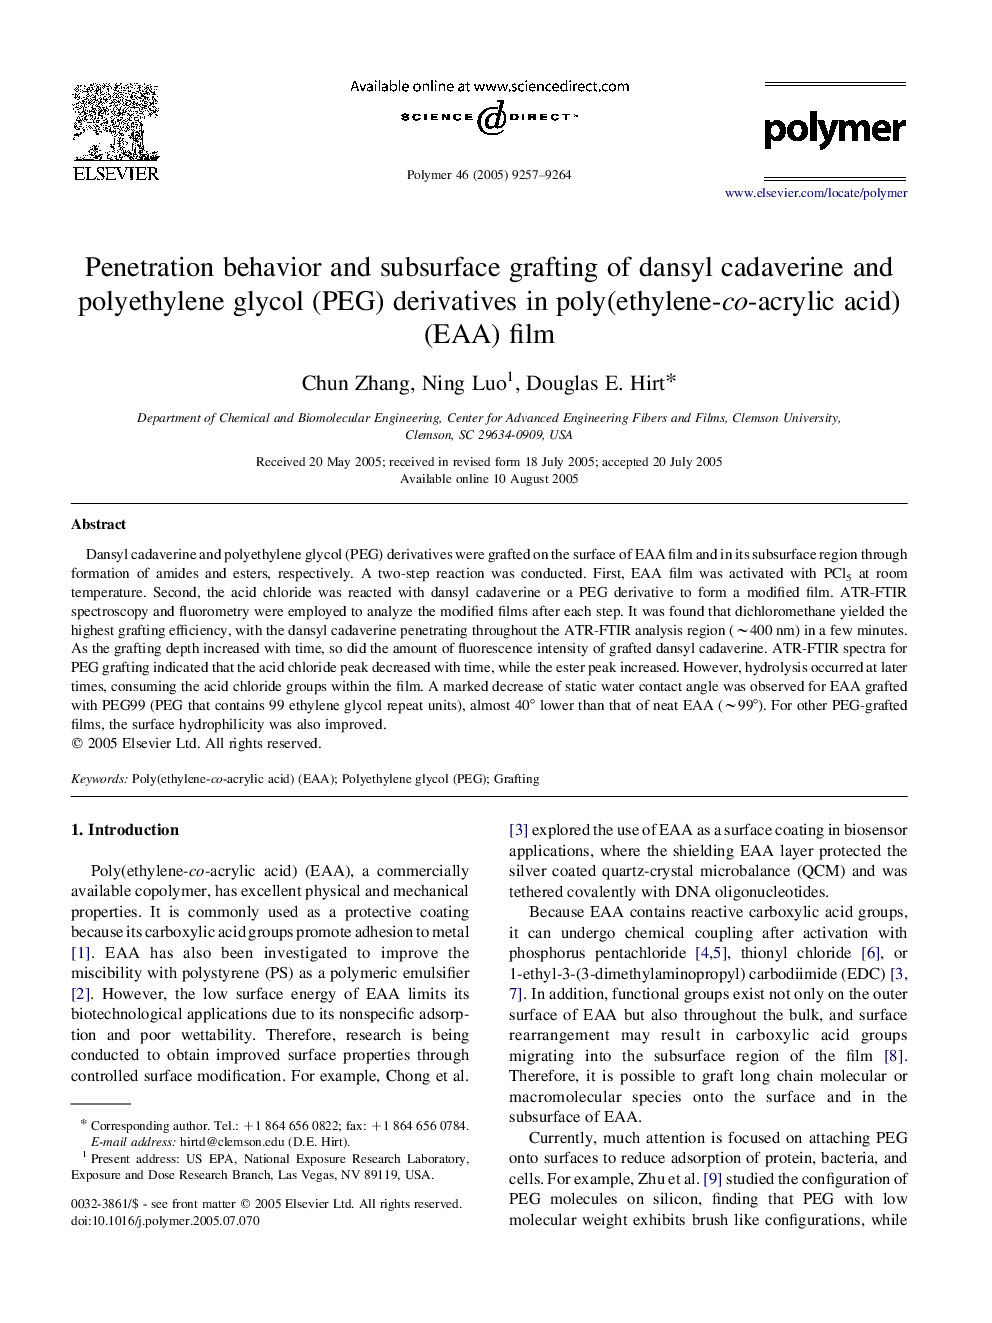 Penetration behavior and subsurface grafting of dansyl cadaverine and polyethylene glycol (PEG) derivatives in poly(ethylene-co-acrylic acid) (EAA) film